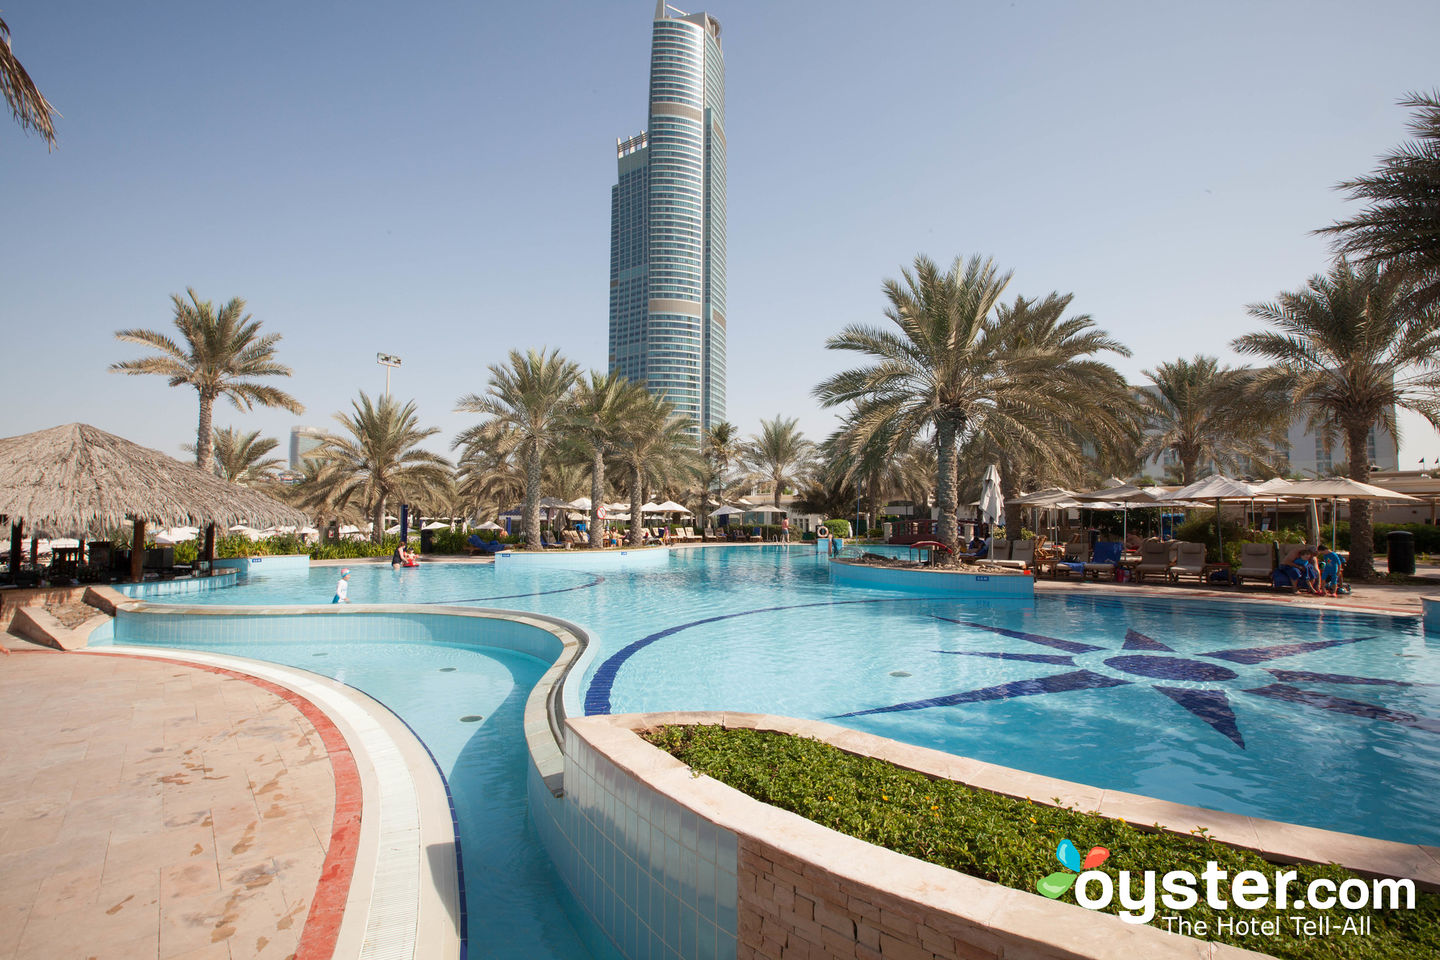 Radisson Blu Hotel Resort Abu Dhabi Corniche Review What To